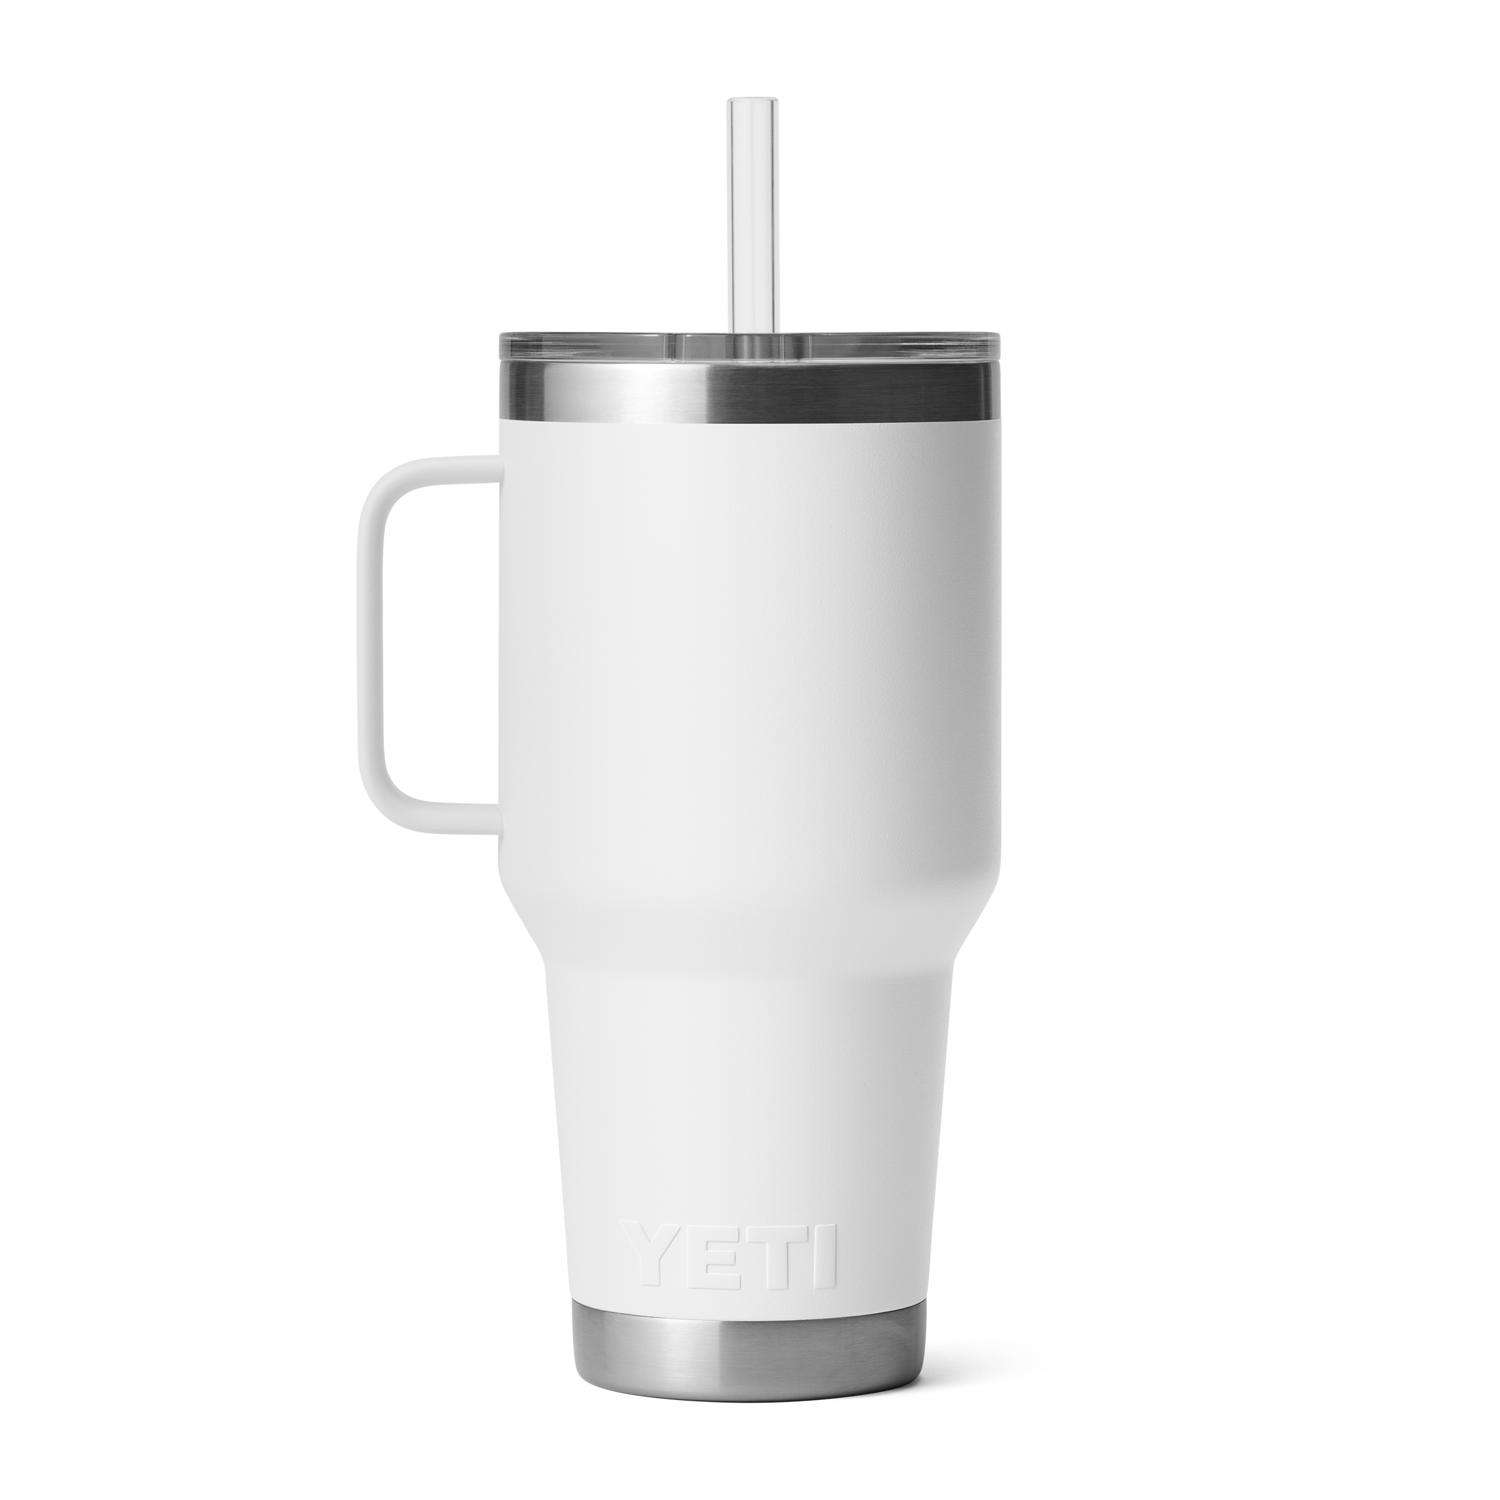 CIVAGO 20 oz Tumbler Mug with Lid and Straw, Insulated Travel Coffee Mug  with Handle, Double Wall St…See more CIVAGO 20 oz Tumbler Mug with Lid and